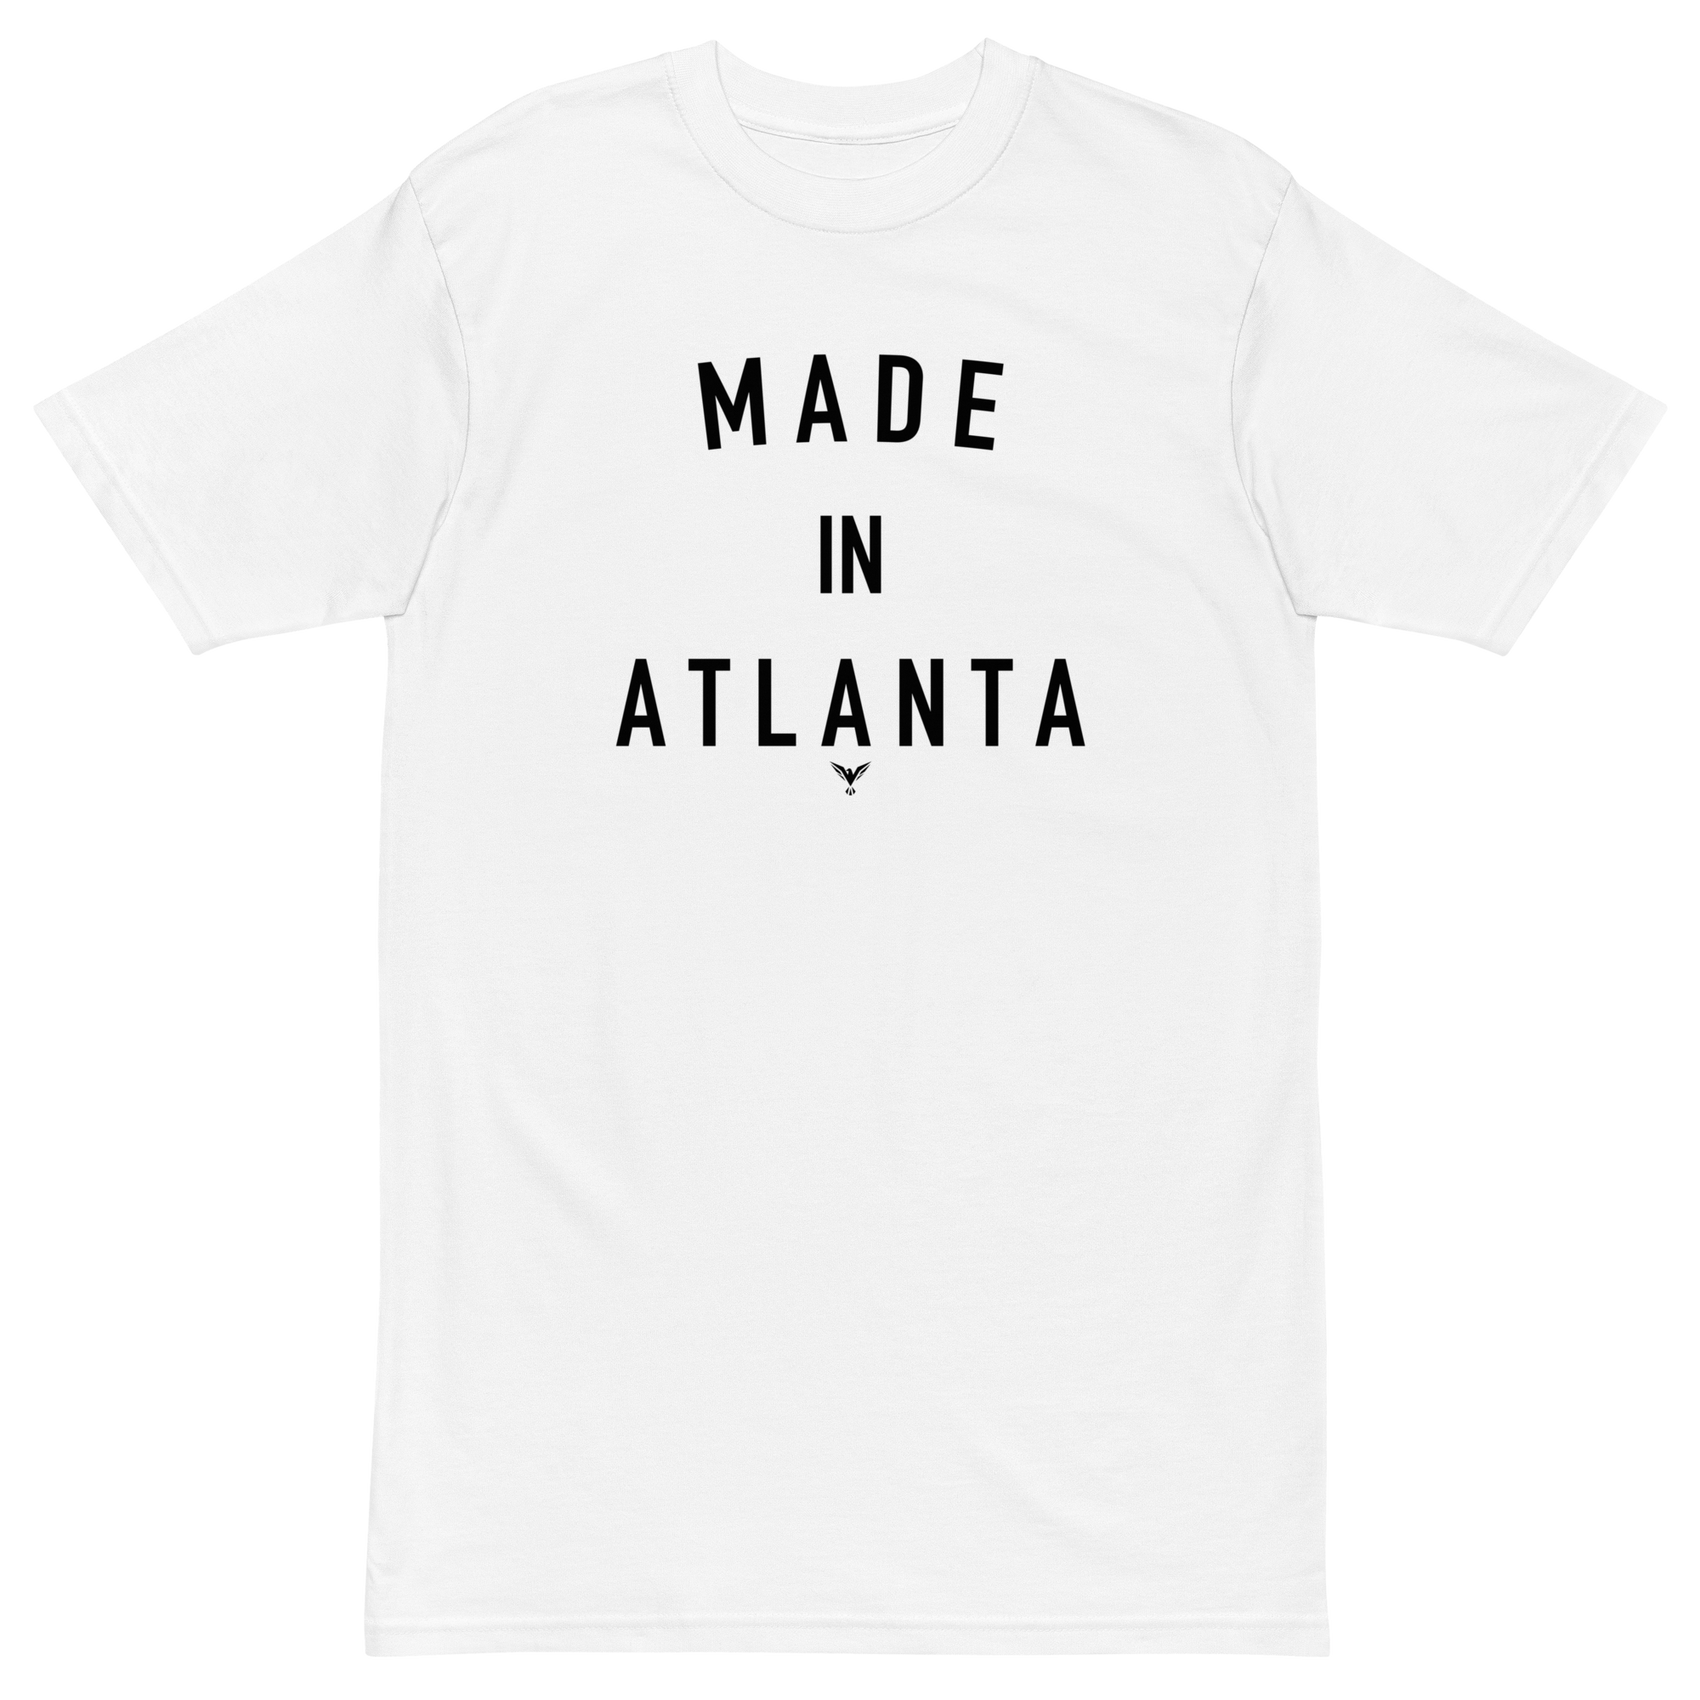 Made In Atlanta  Classic Tee
Proudly Designed In Atlanta, GA - The AAWOL Made in Atlanta Tee features the classic Made In Atlanta Logo on 100% Cotton fabric to help keep you comfortable. Fits tT-shirtAAWOLAtlanta Classic Tee